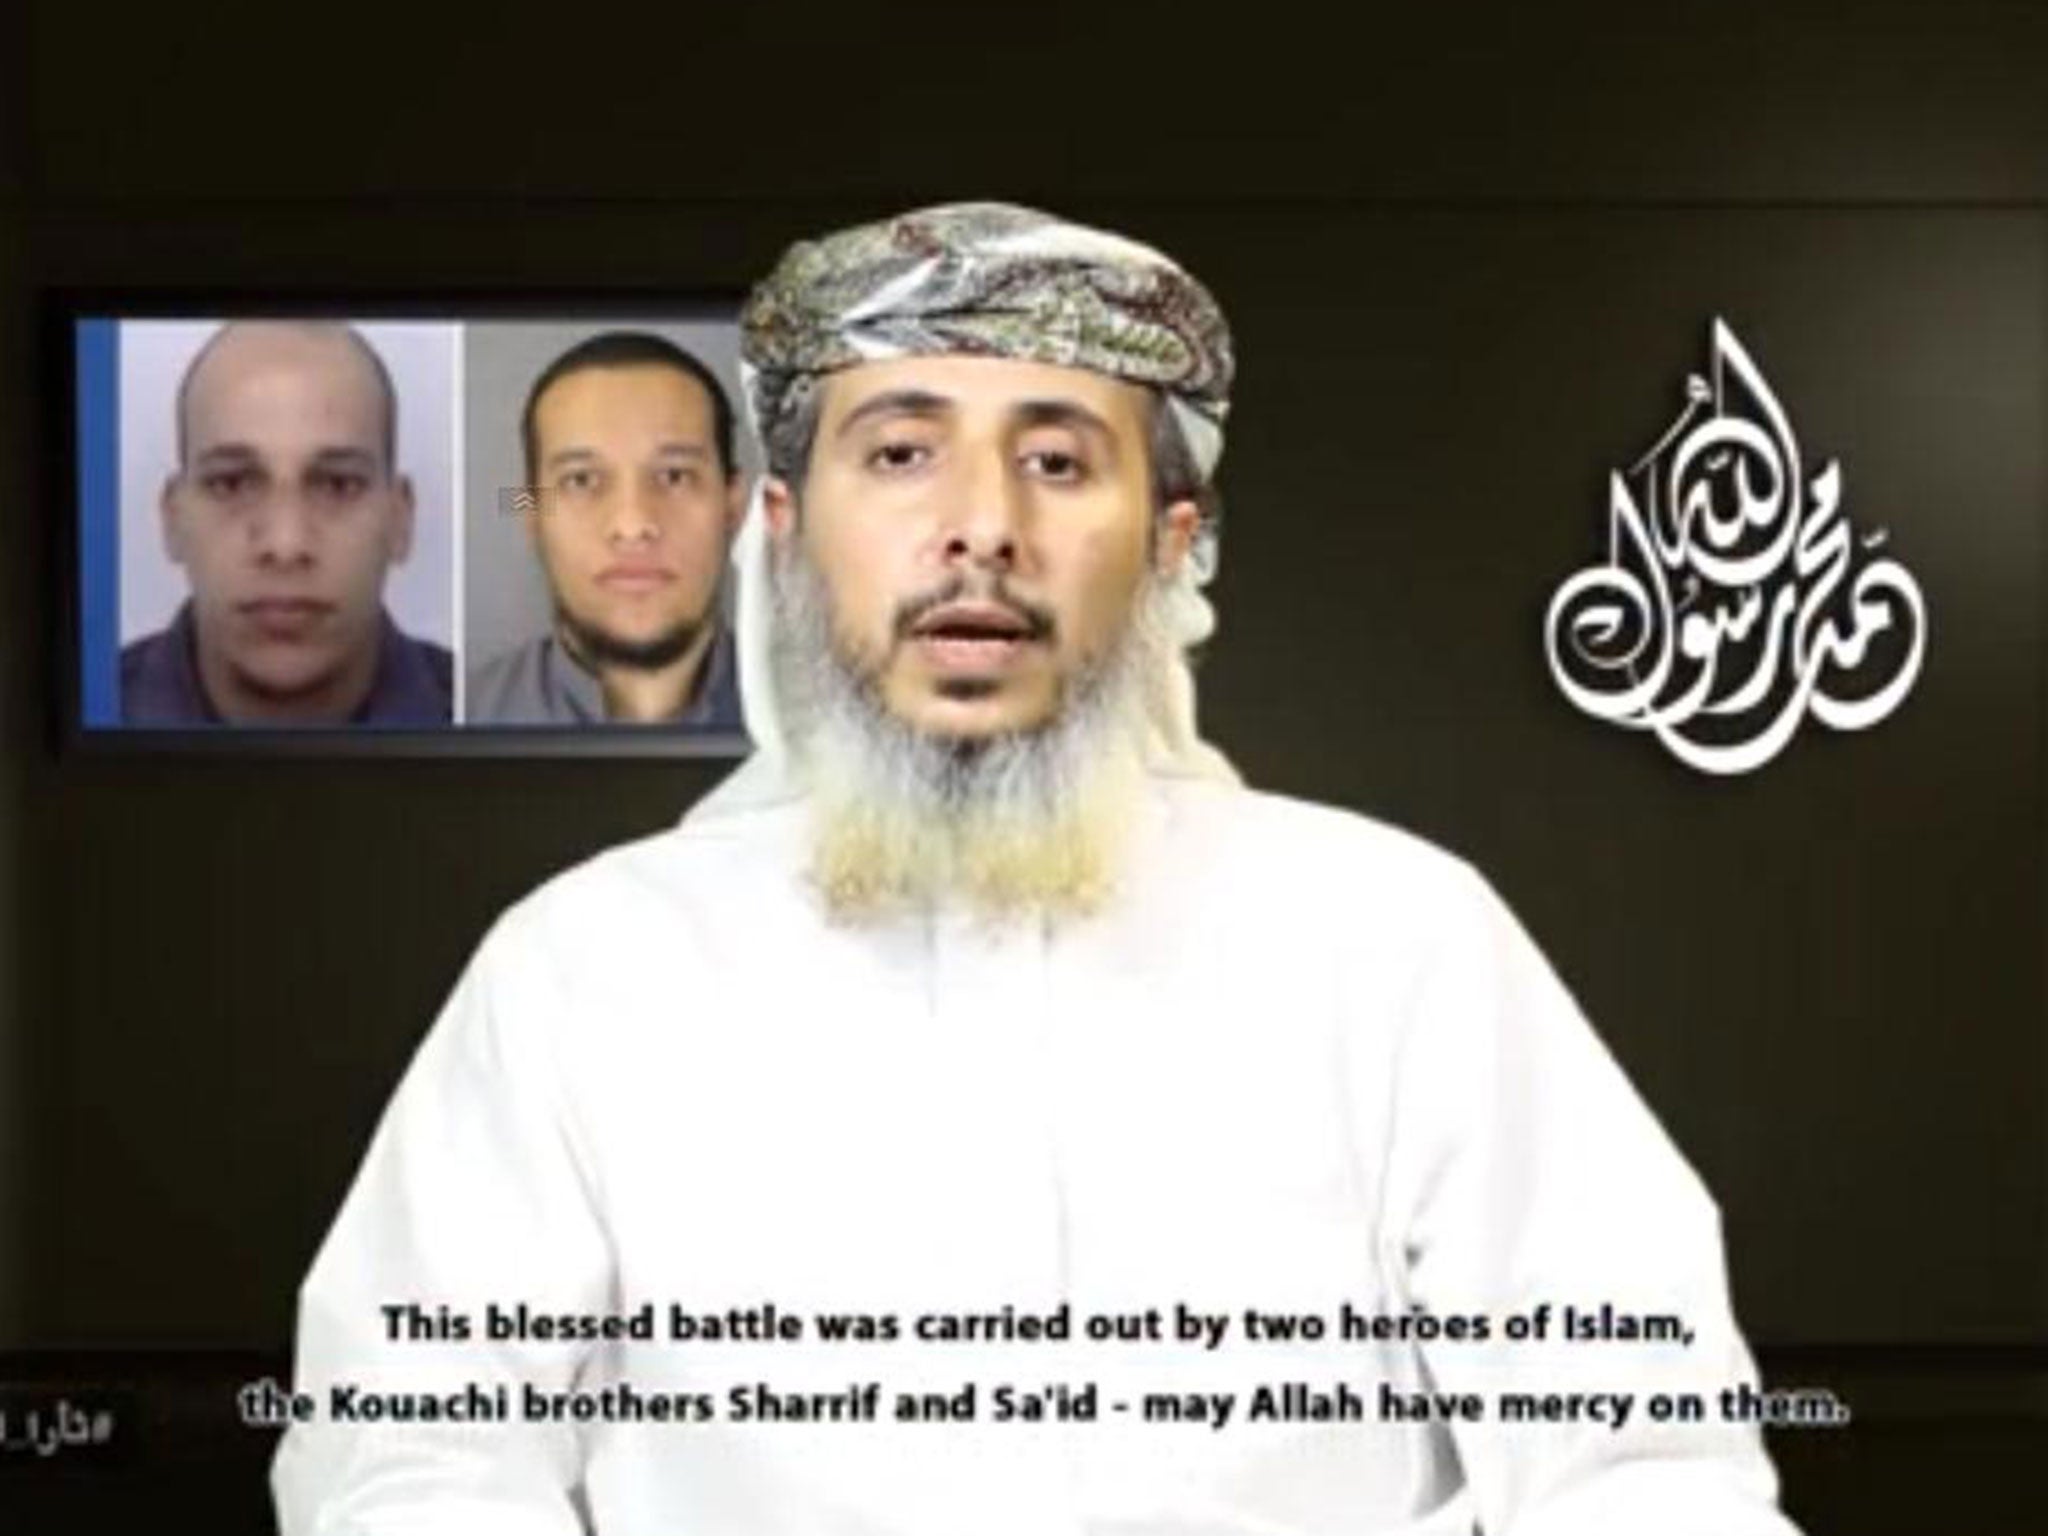 Al-Qaeda ideologue Nasr al-Ansi claimed the attacks in a video